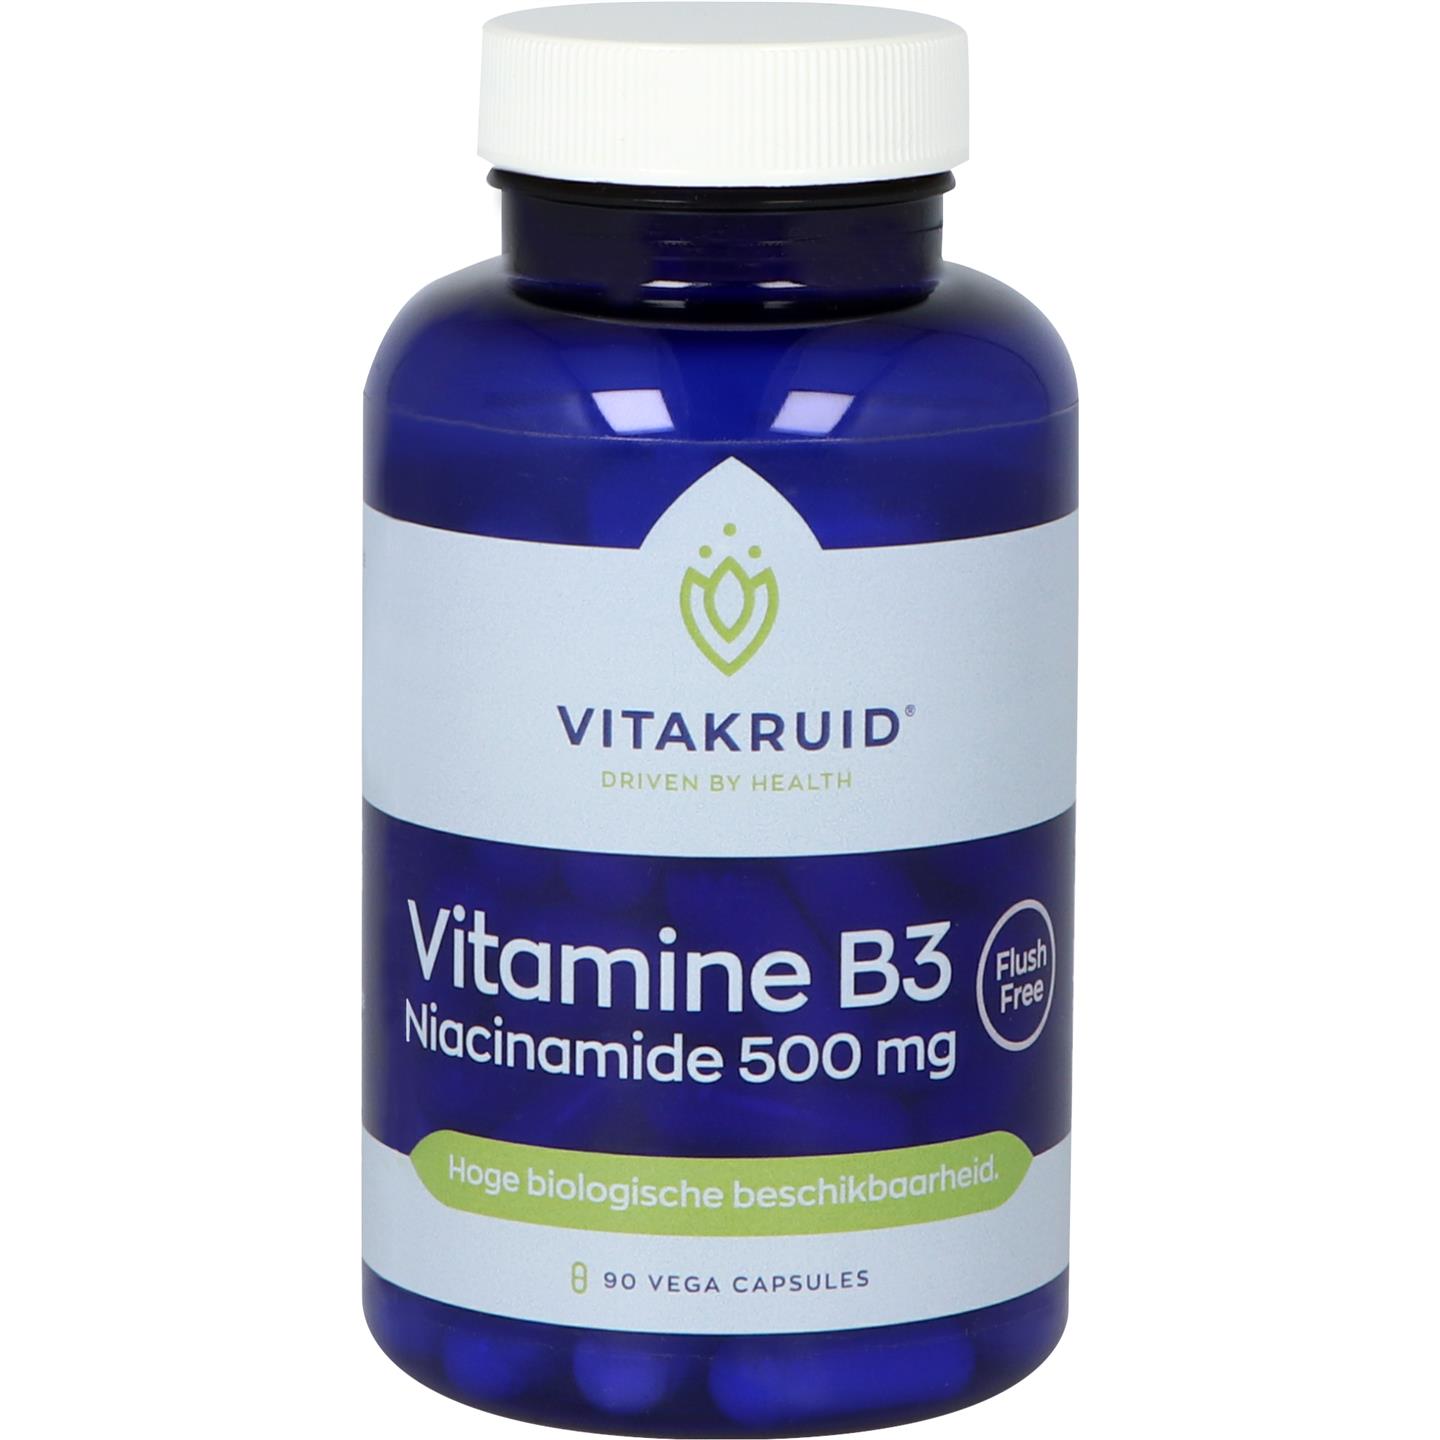 Vitamine B3